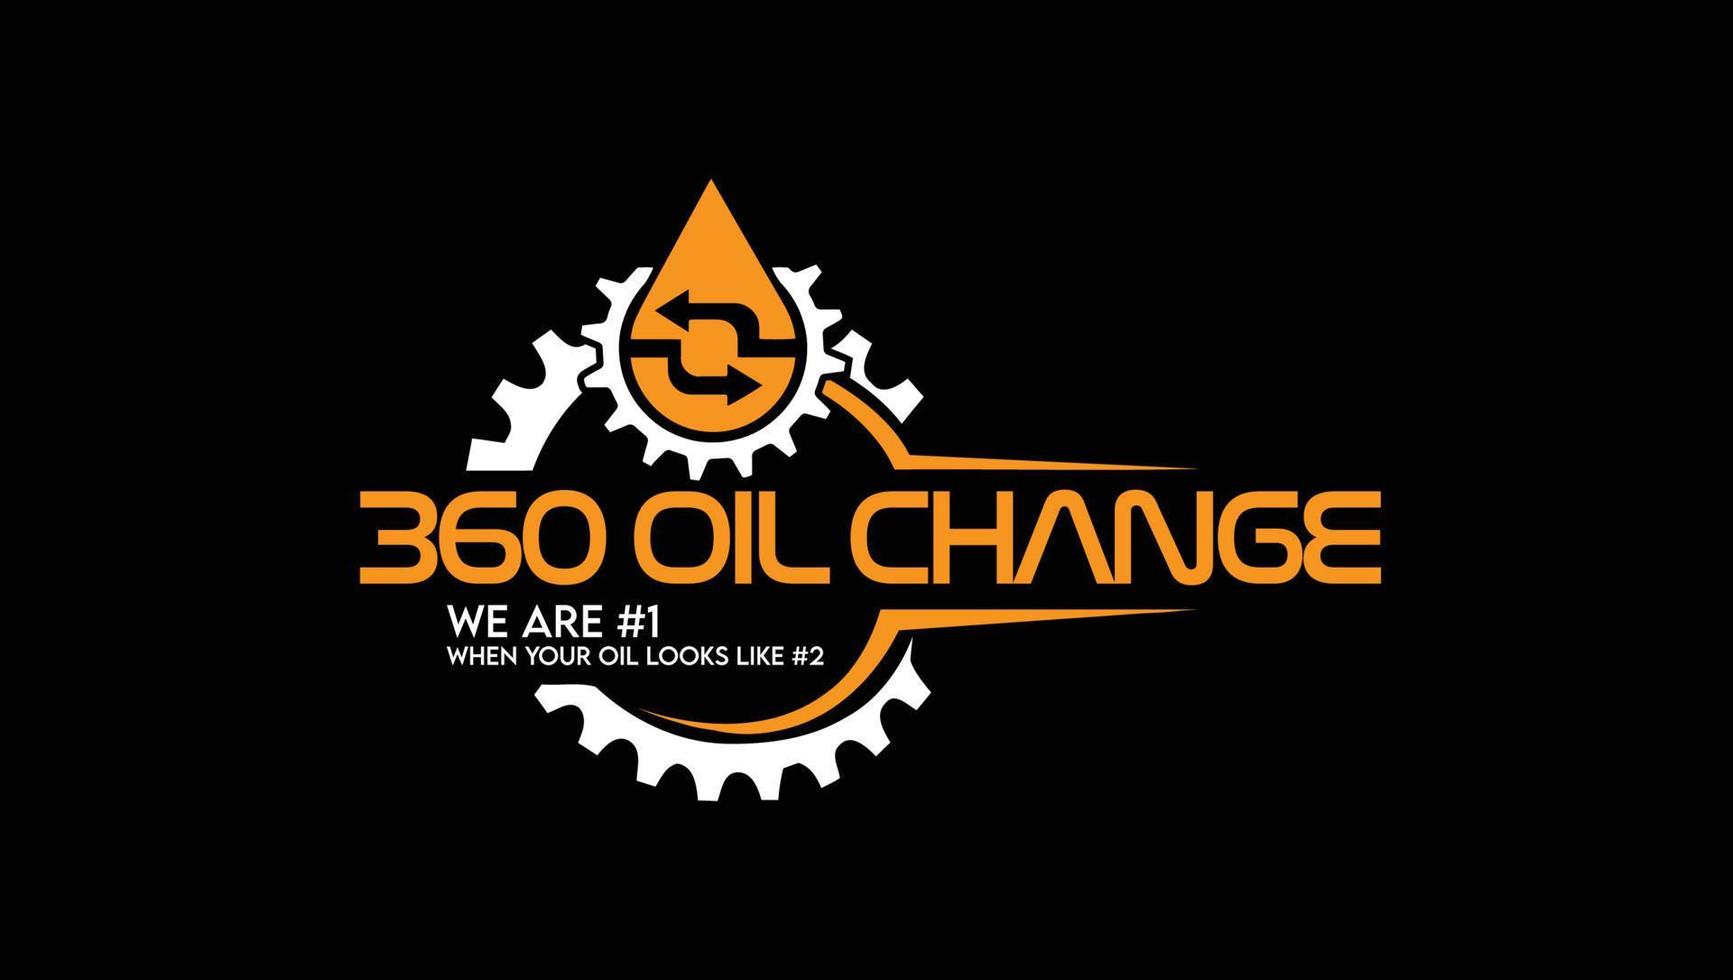 360 vetores gratuitos de imagens de logotipo de troca de óleo, banco de imagens